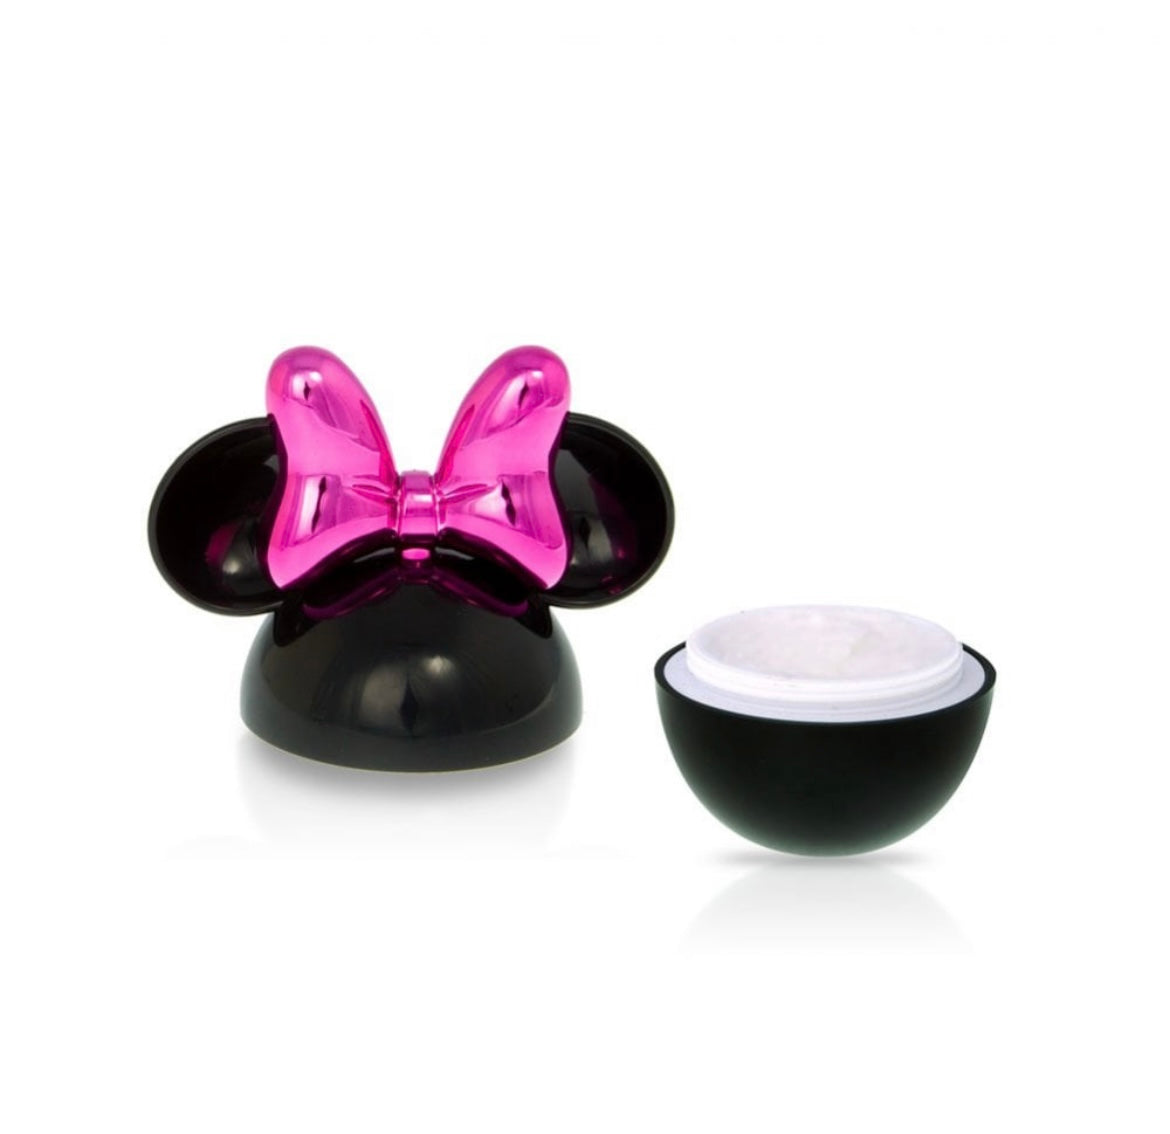 Disney Minnie Magic Hand Cream